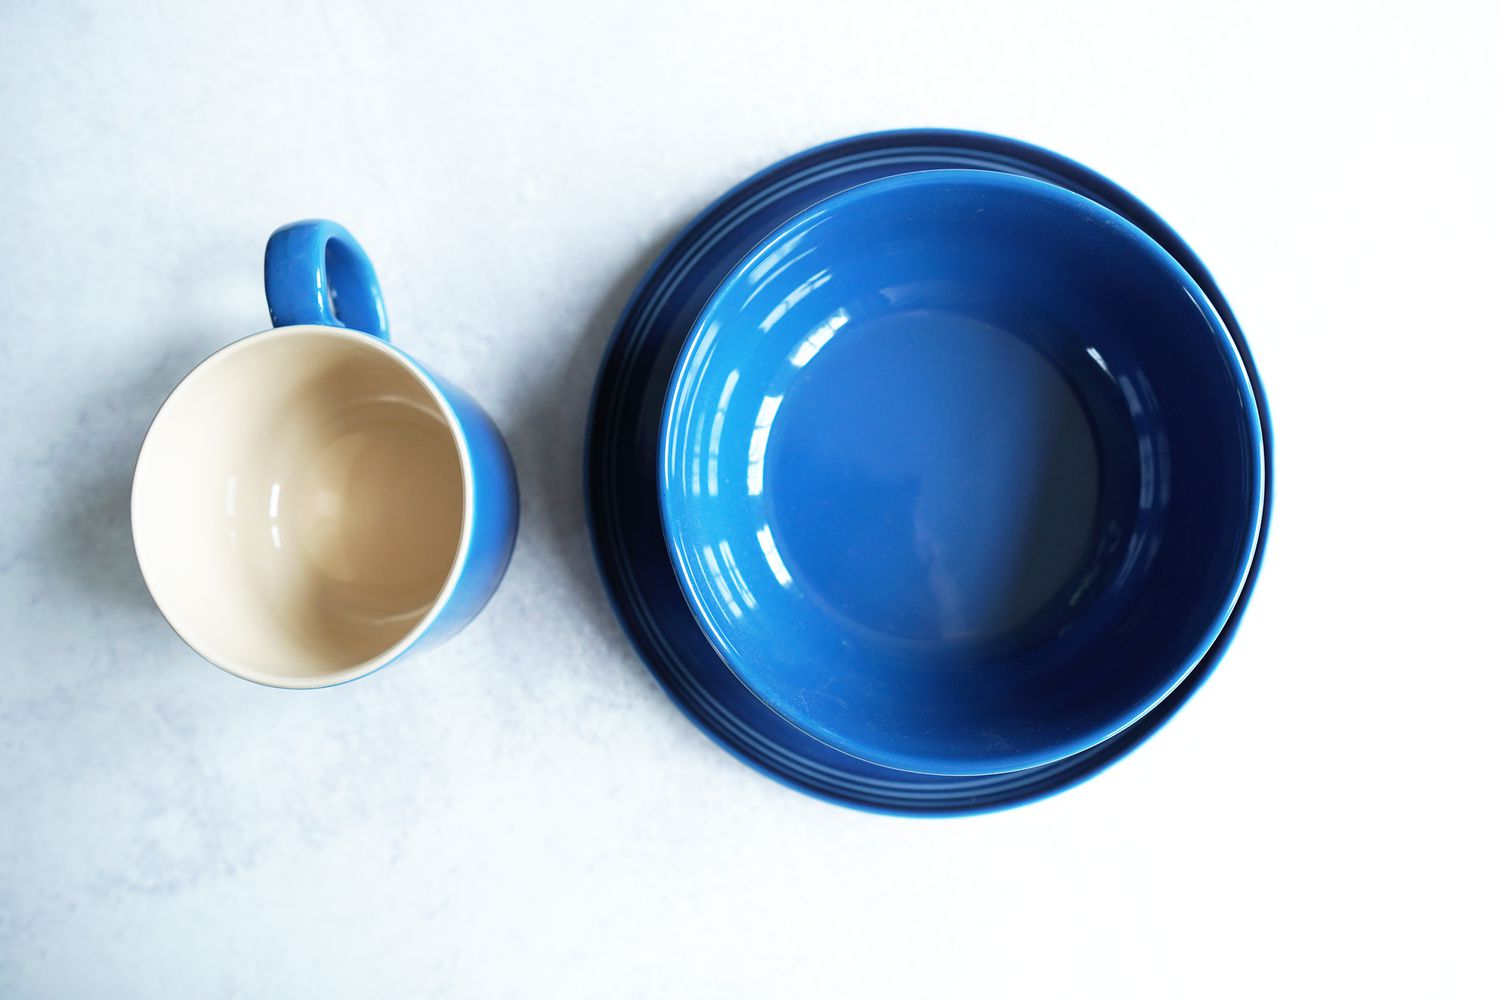 a blue bowl, plate, and mug on a grey background